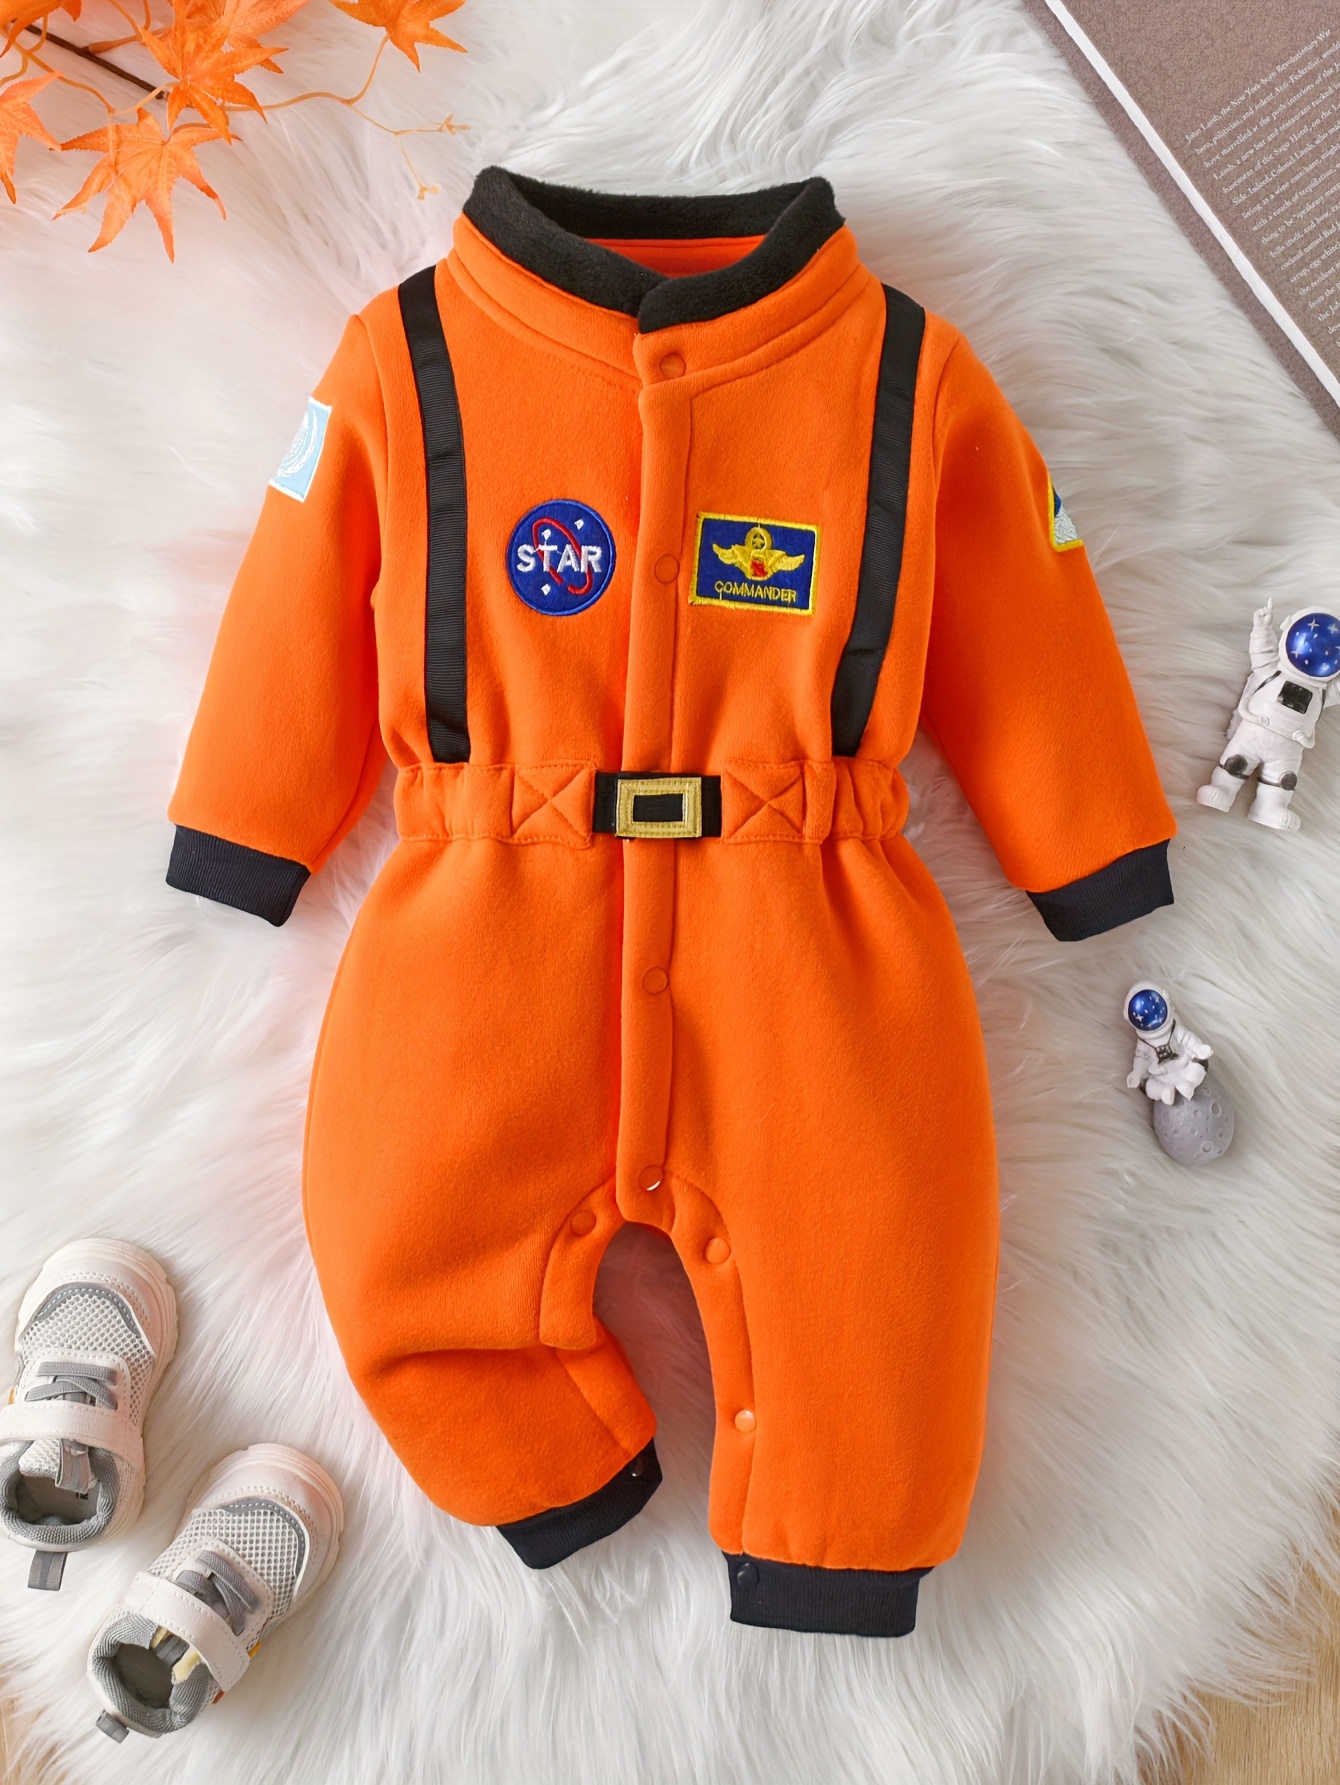 How to Make an Astronaut Costume for a Child  Astronauta, Tuta spaziale,  Costume fai da te